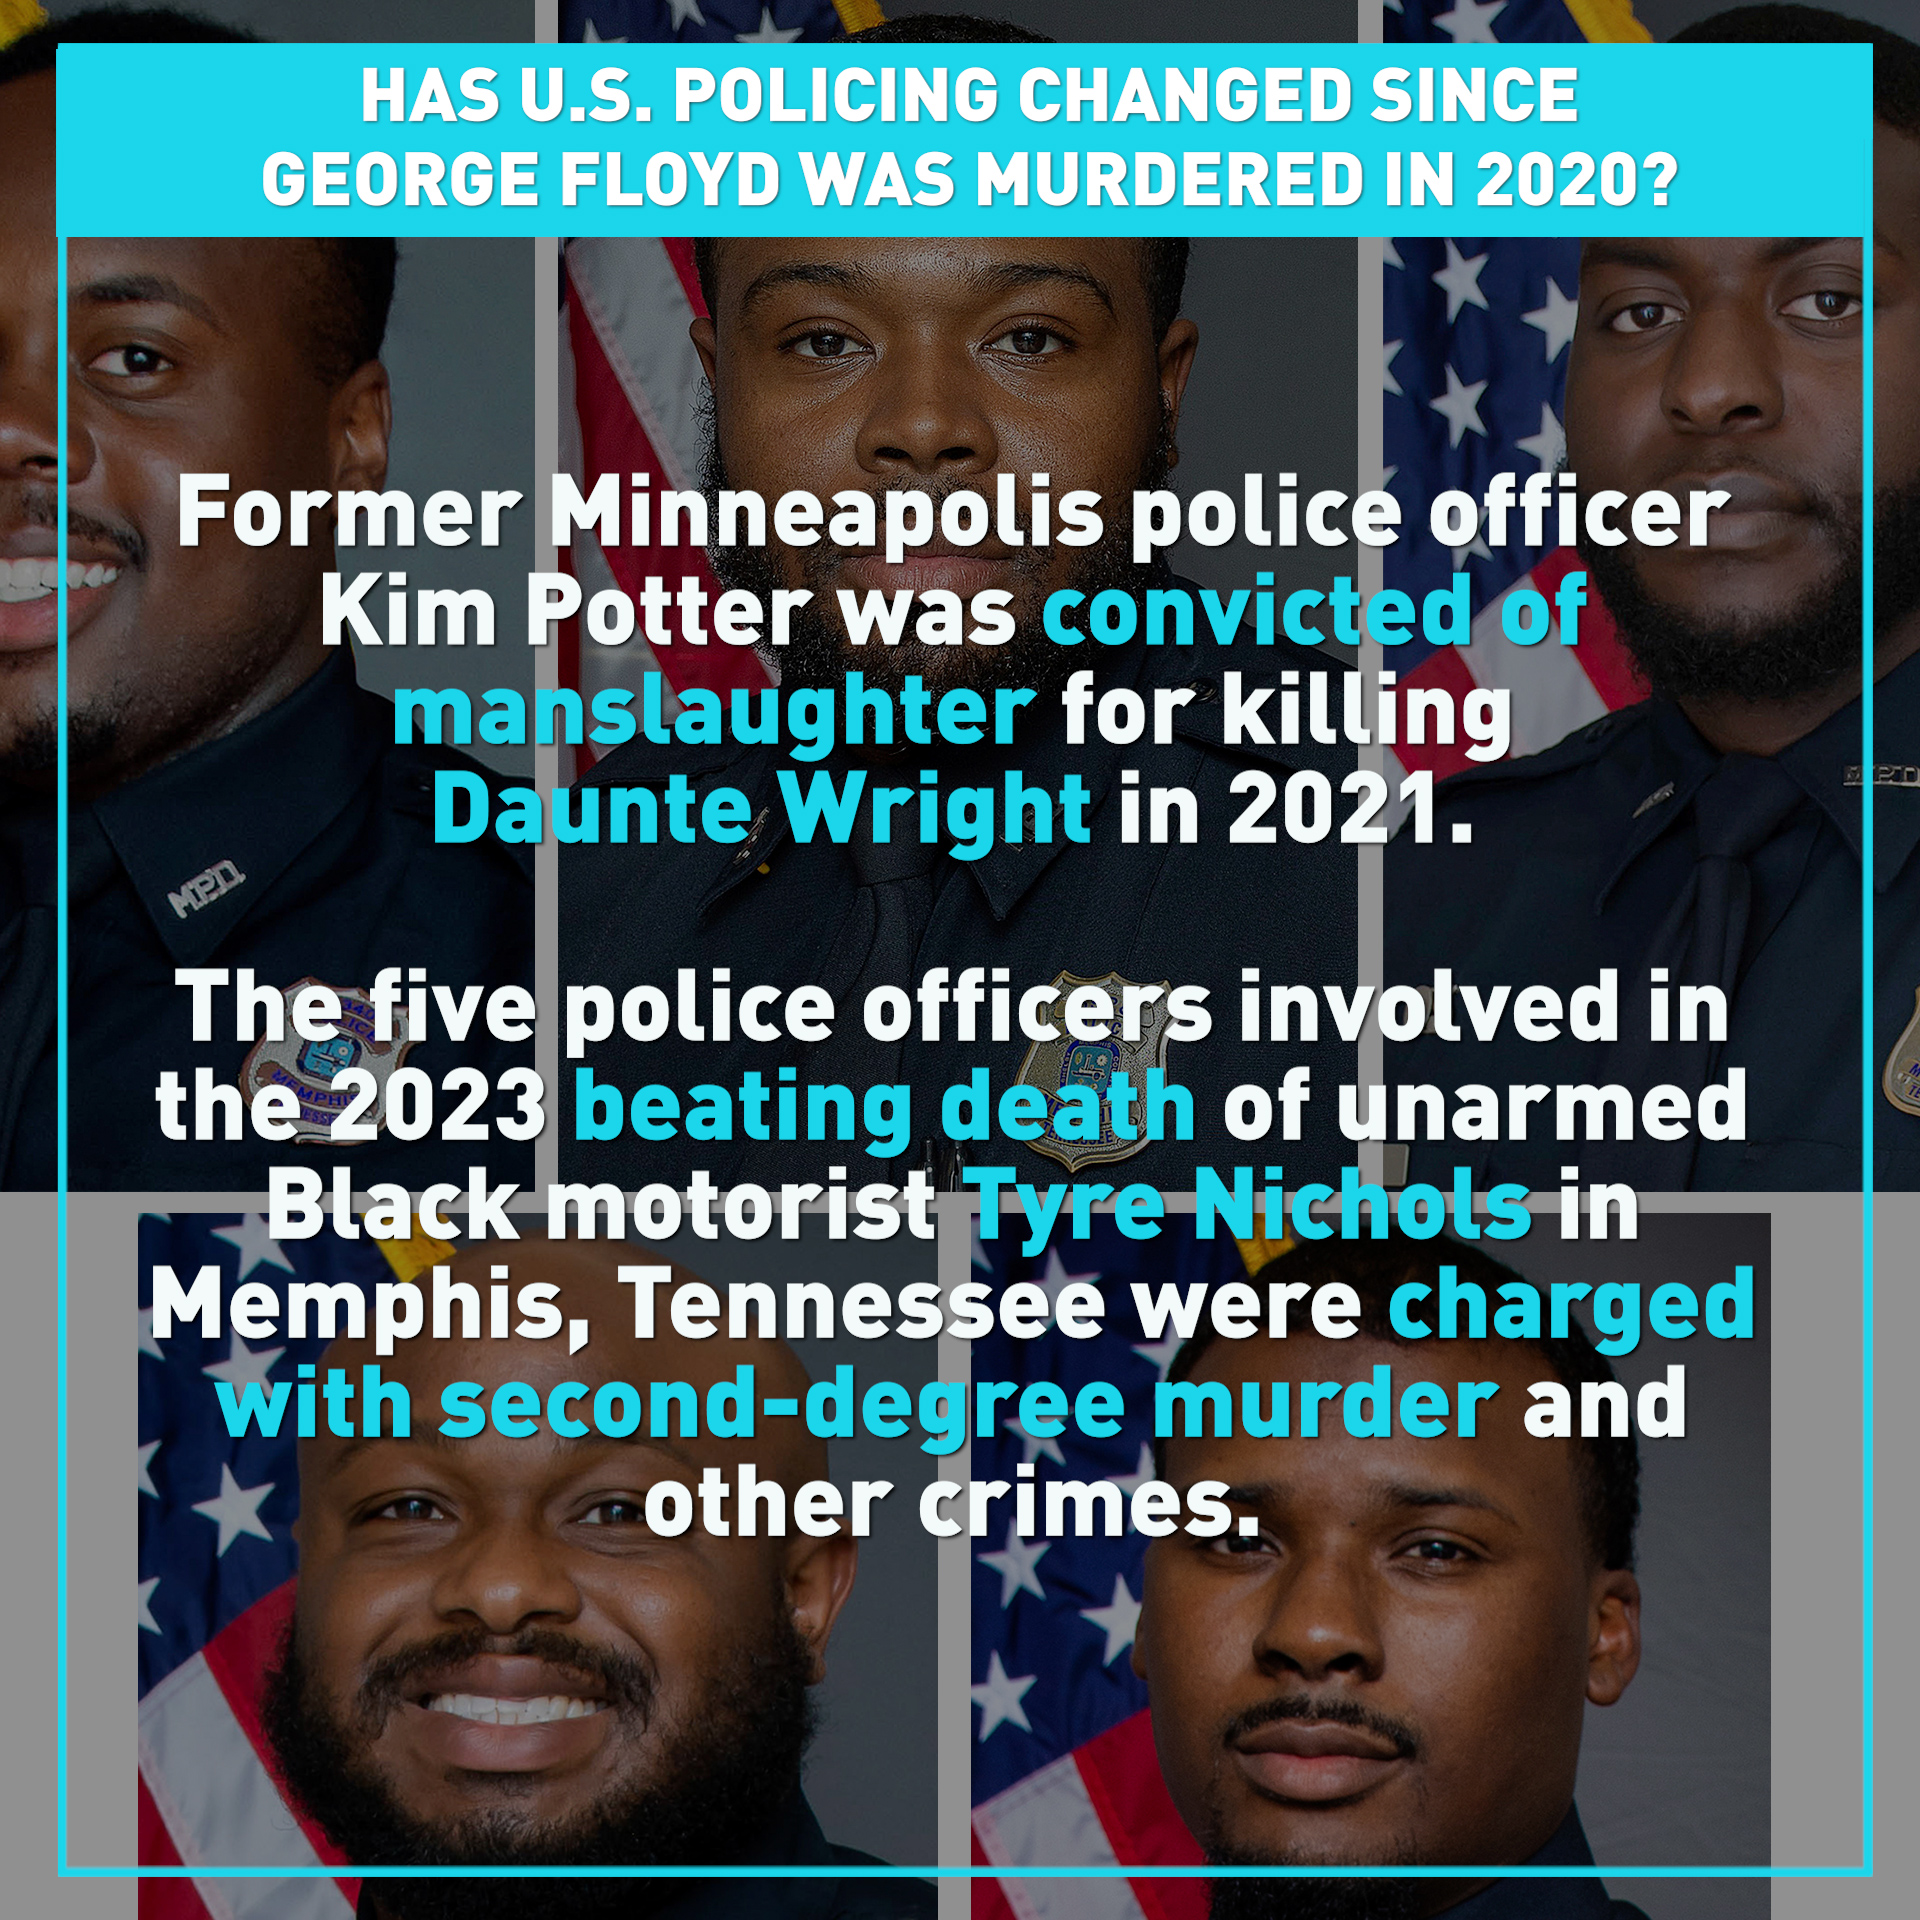 Has U.S. policing changed since George Floyd was murdered three years ago? 